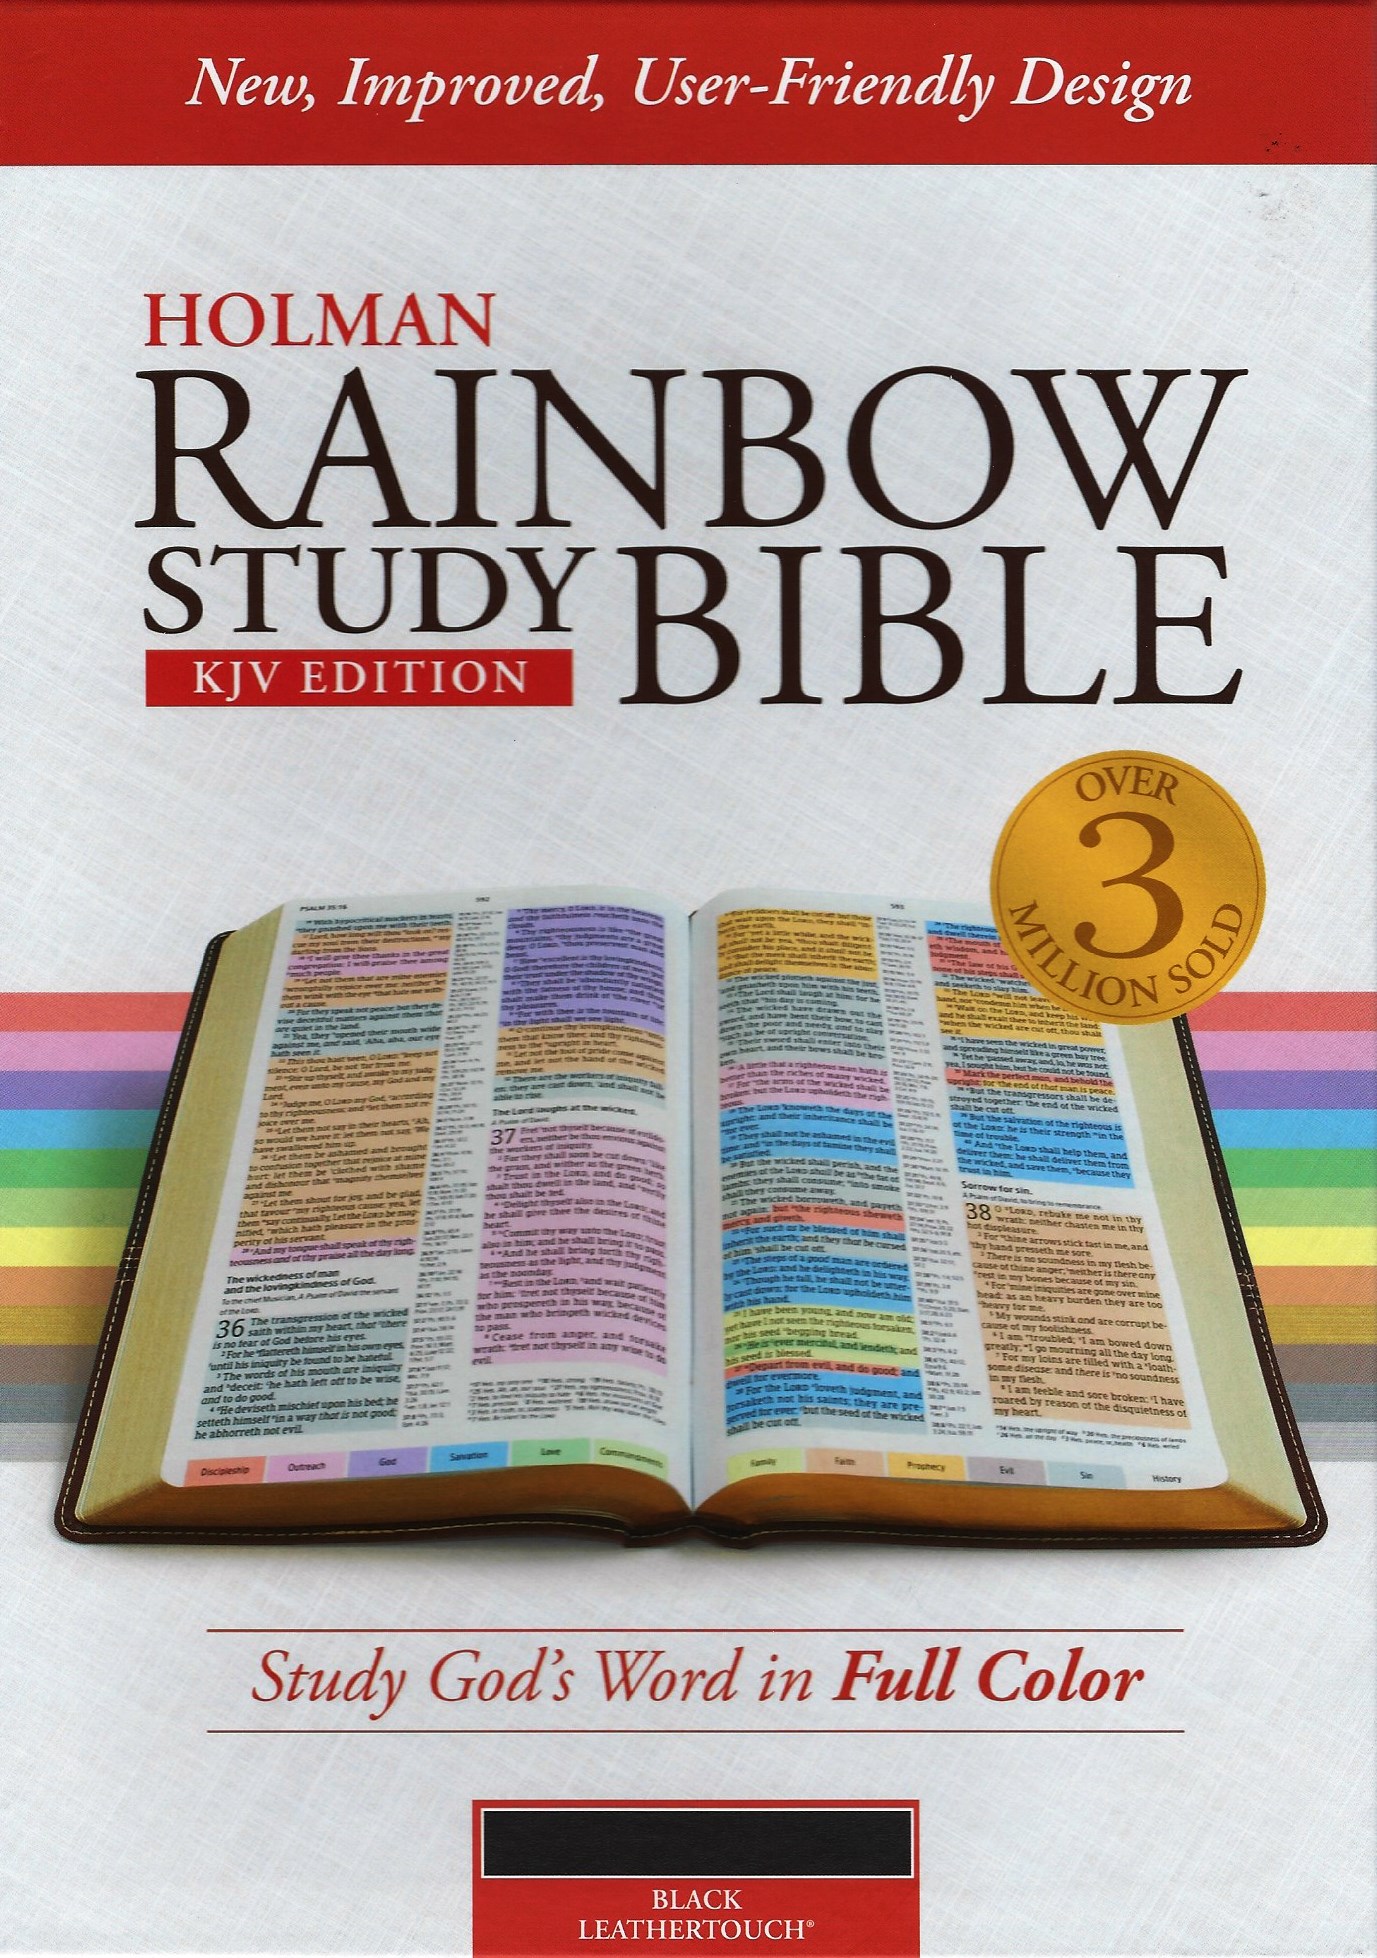 KJV HOLMAN RAINBOW STUDY BIBLE Black Leathertouch